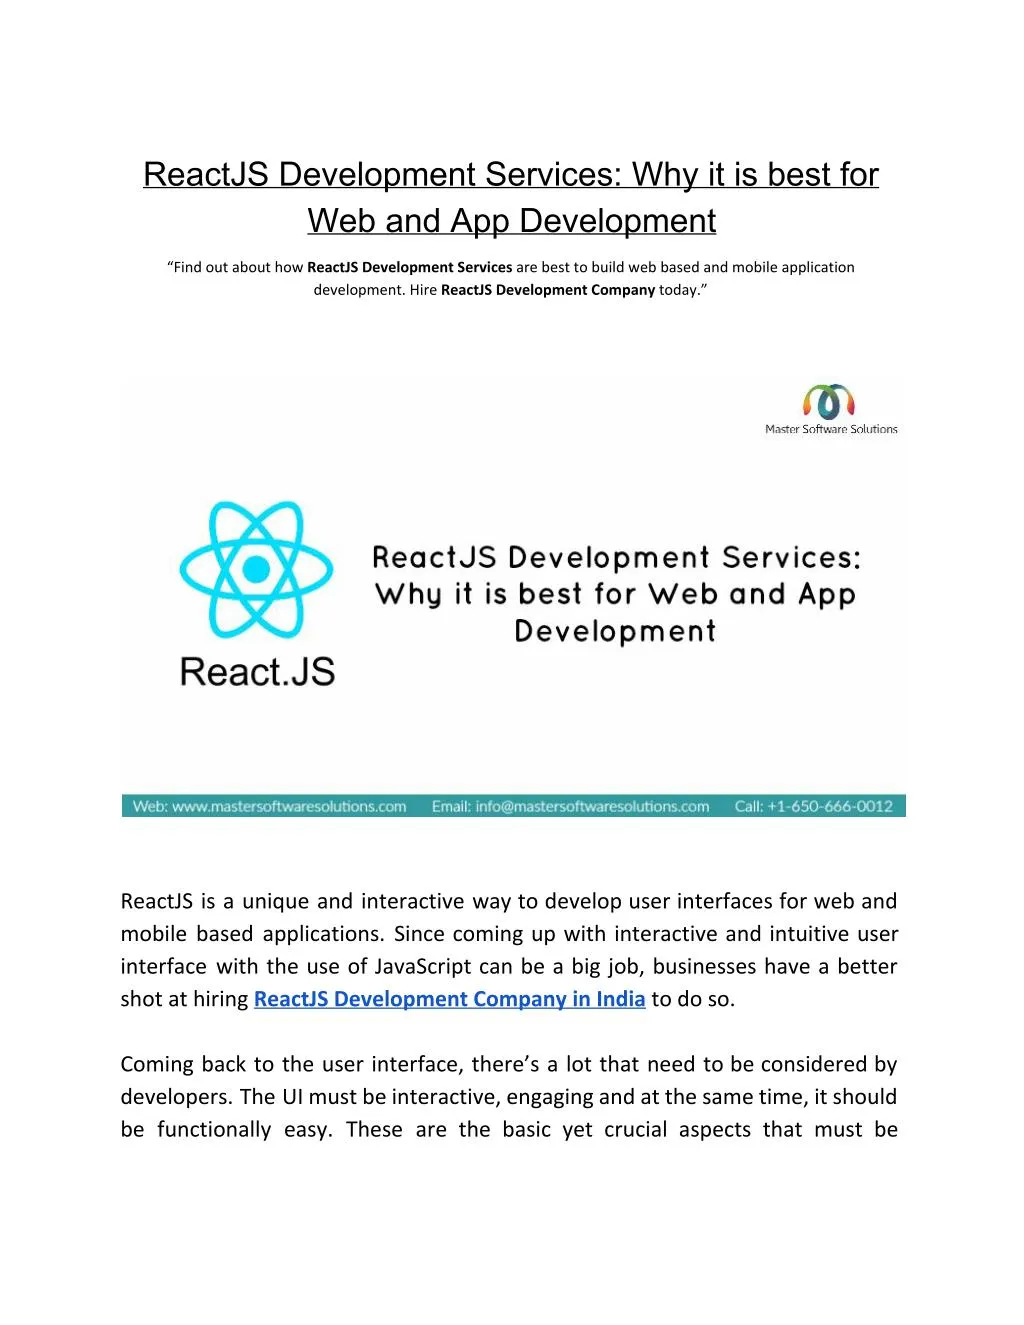 reactjs development services why it is best